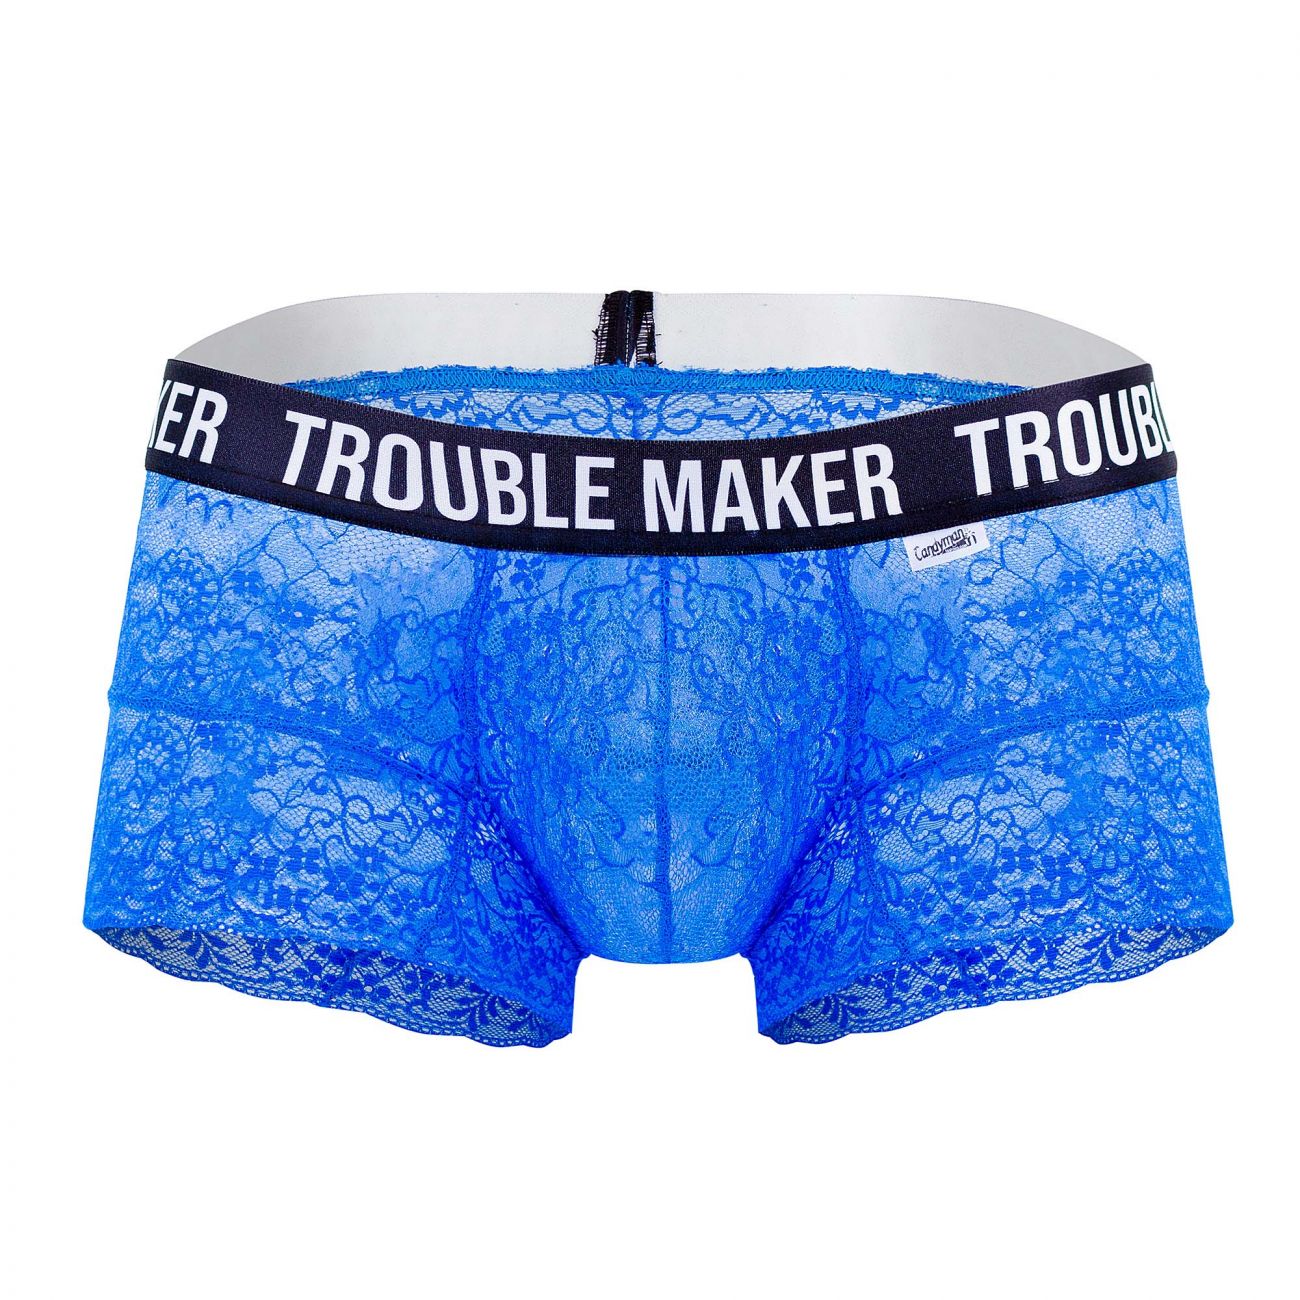 CandyMan 99616X Trouble Maker Lace Trunks Dark Blue Plus Sizes